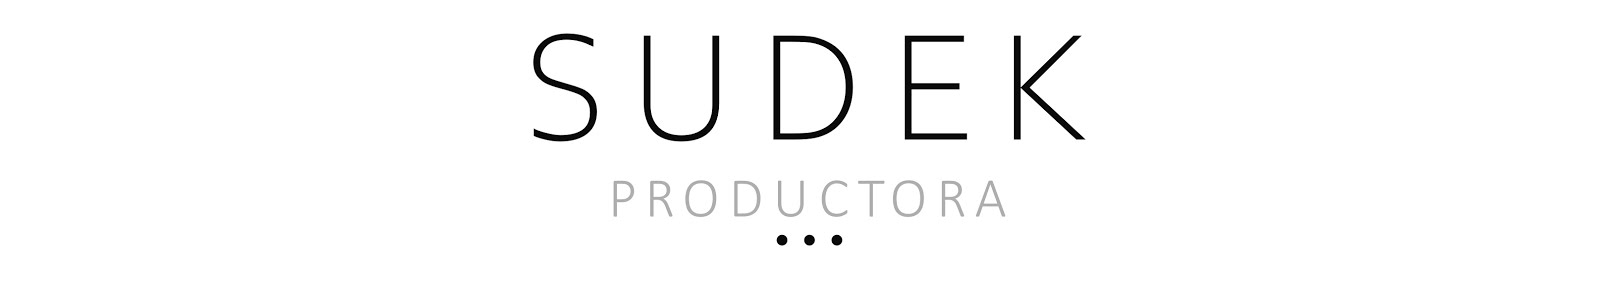 Sudek Productora